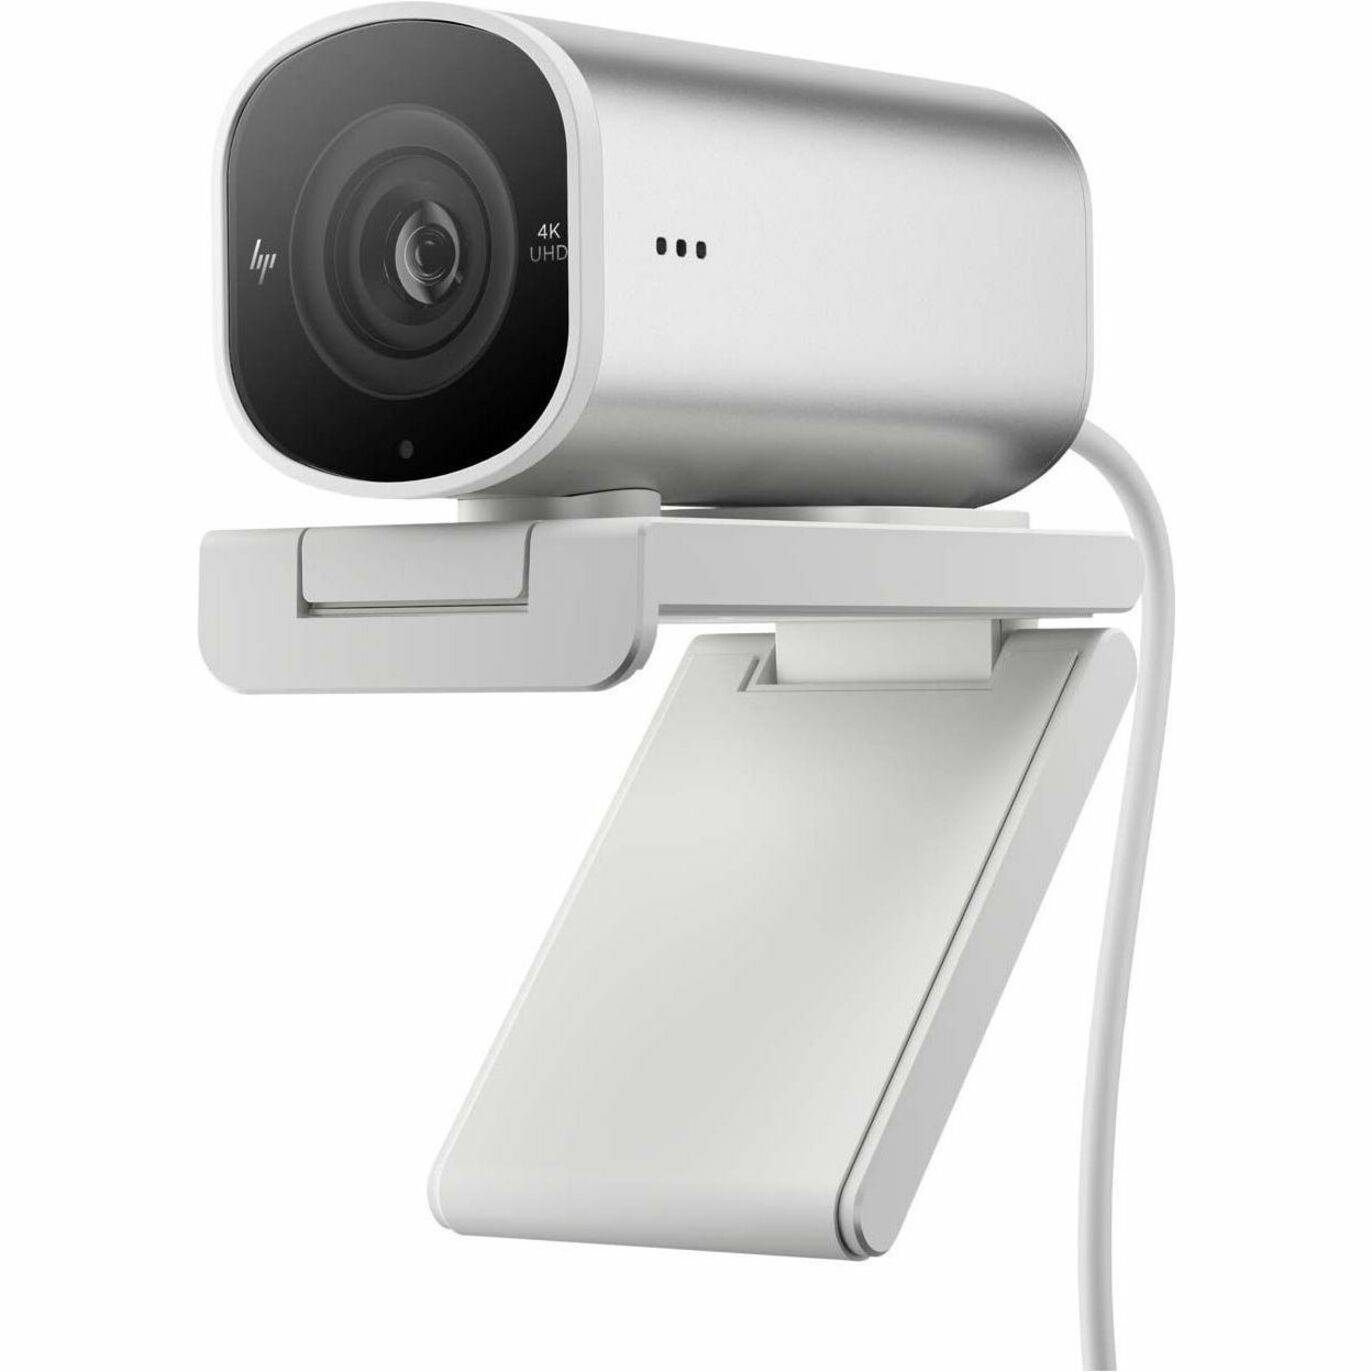 HP 960 Webcam - 8 Megapixel - 60 fps - Silver - USB 3.0 Type A (695J6AA#ABL)